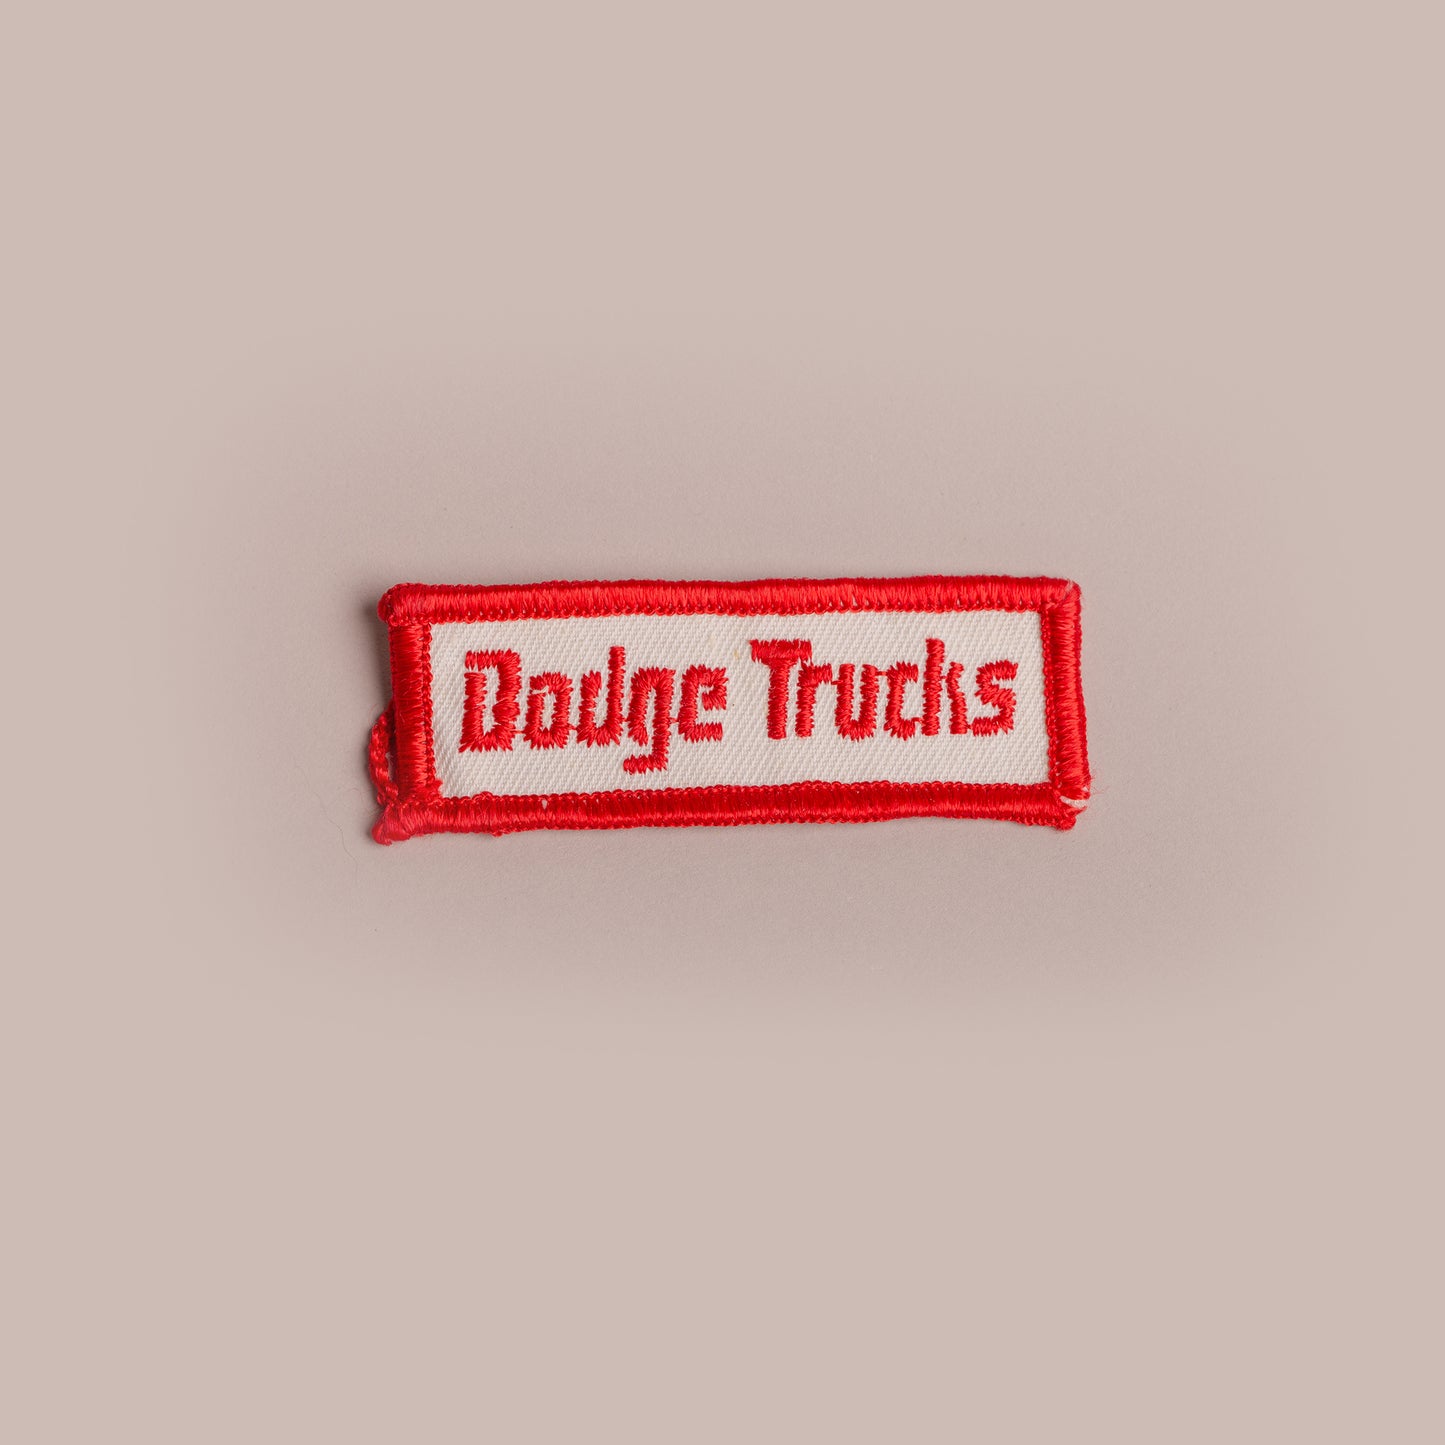 Vintage Patch - Dodge Trucks